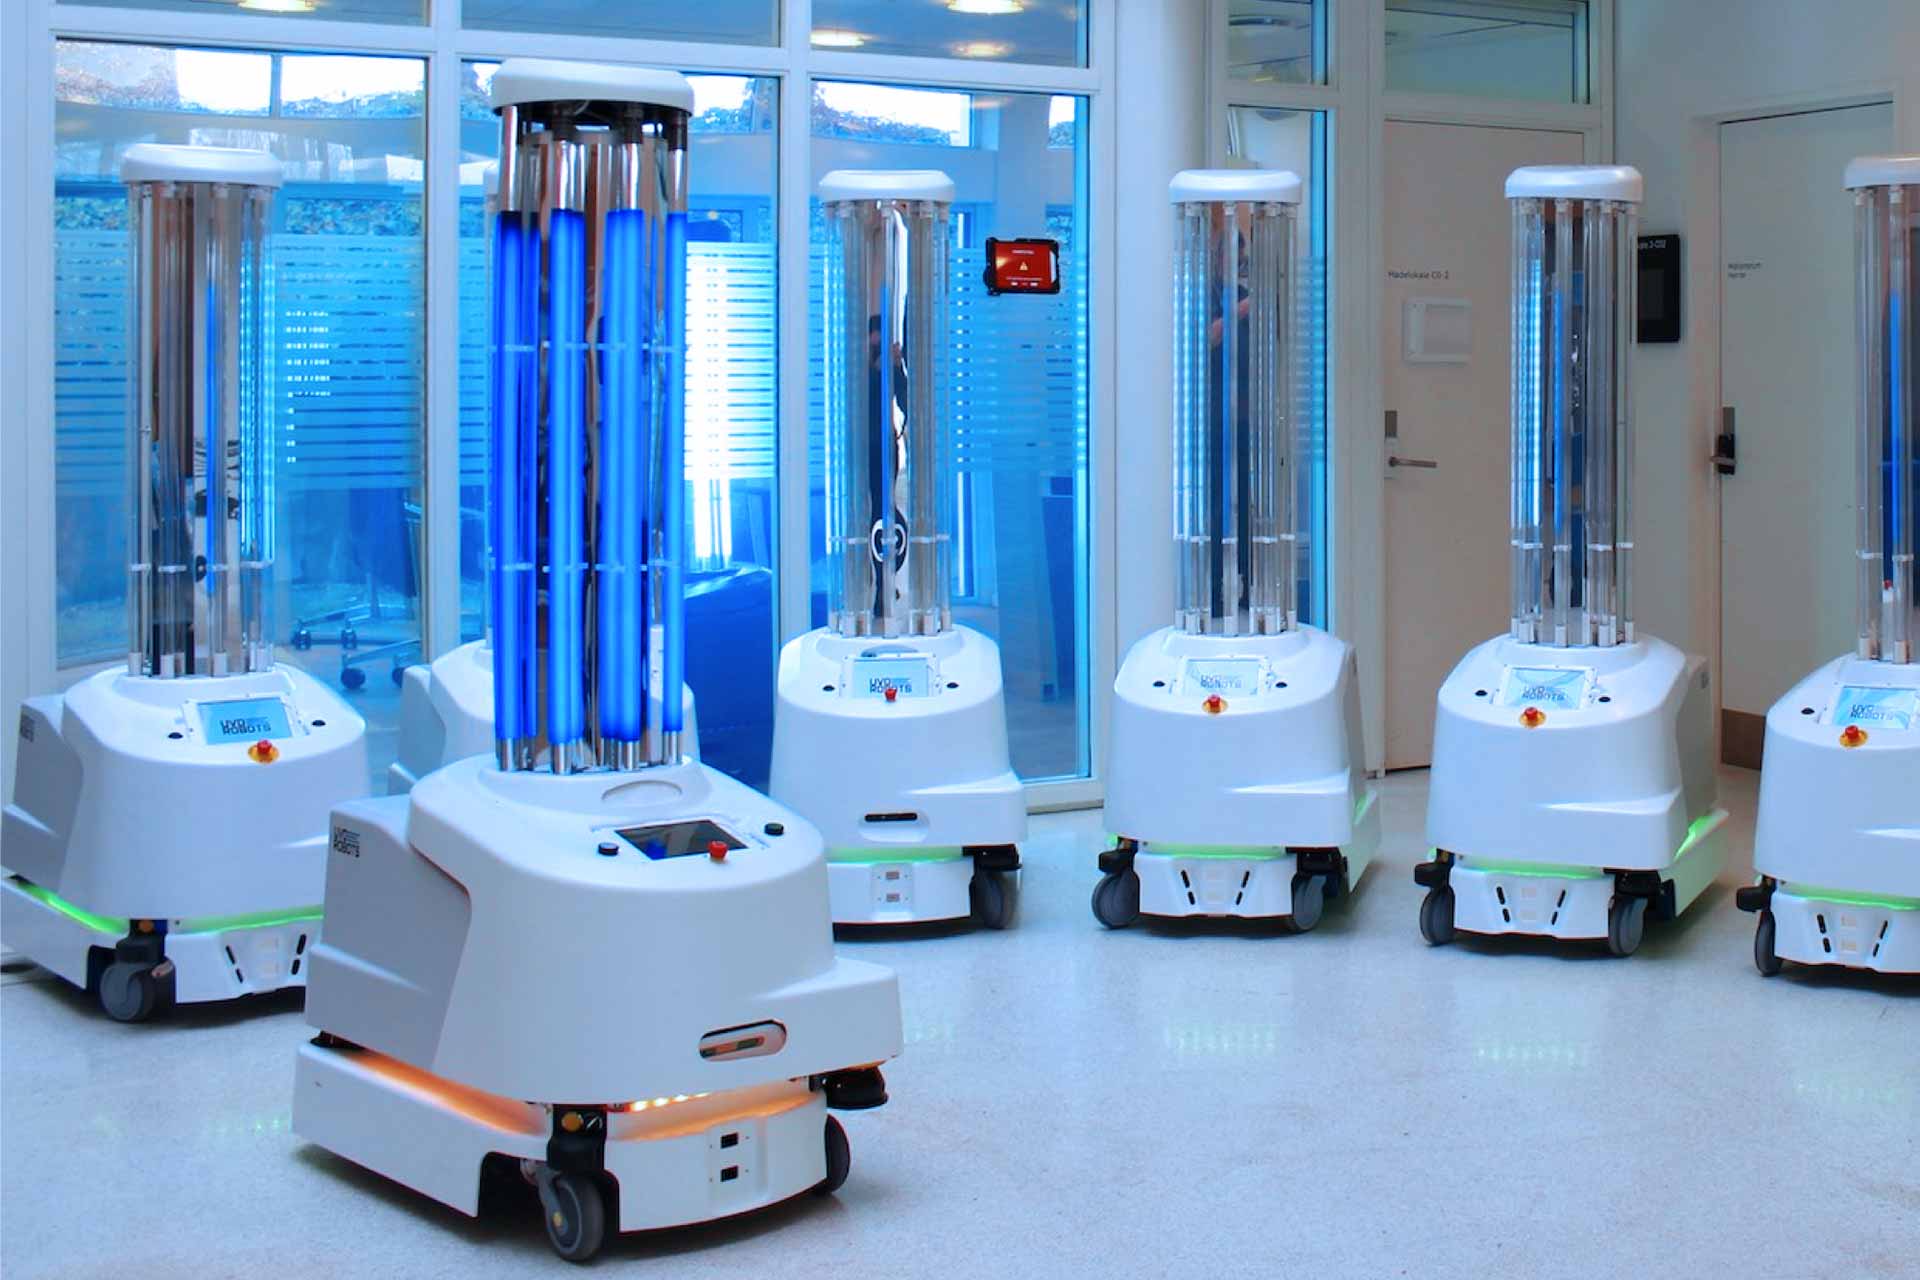 UV disinfection robots